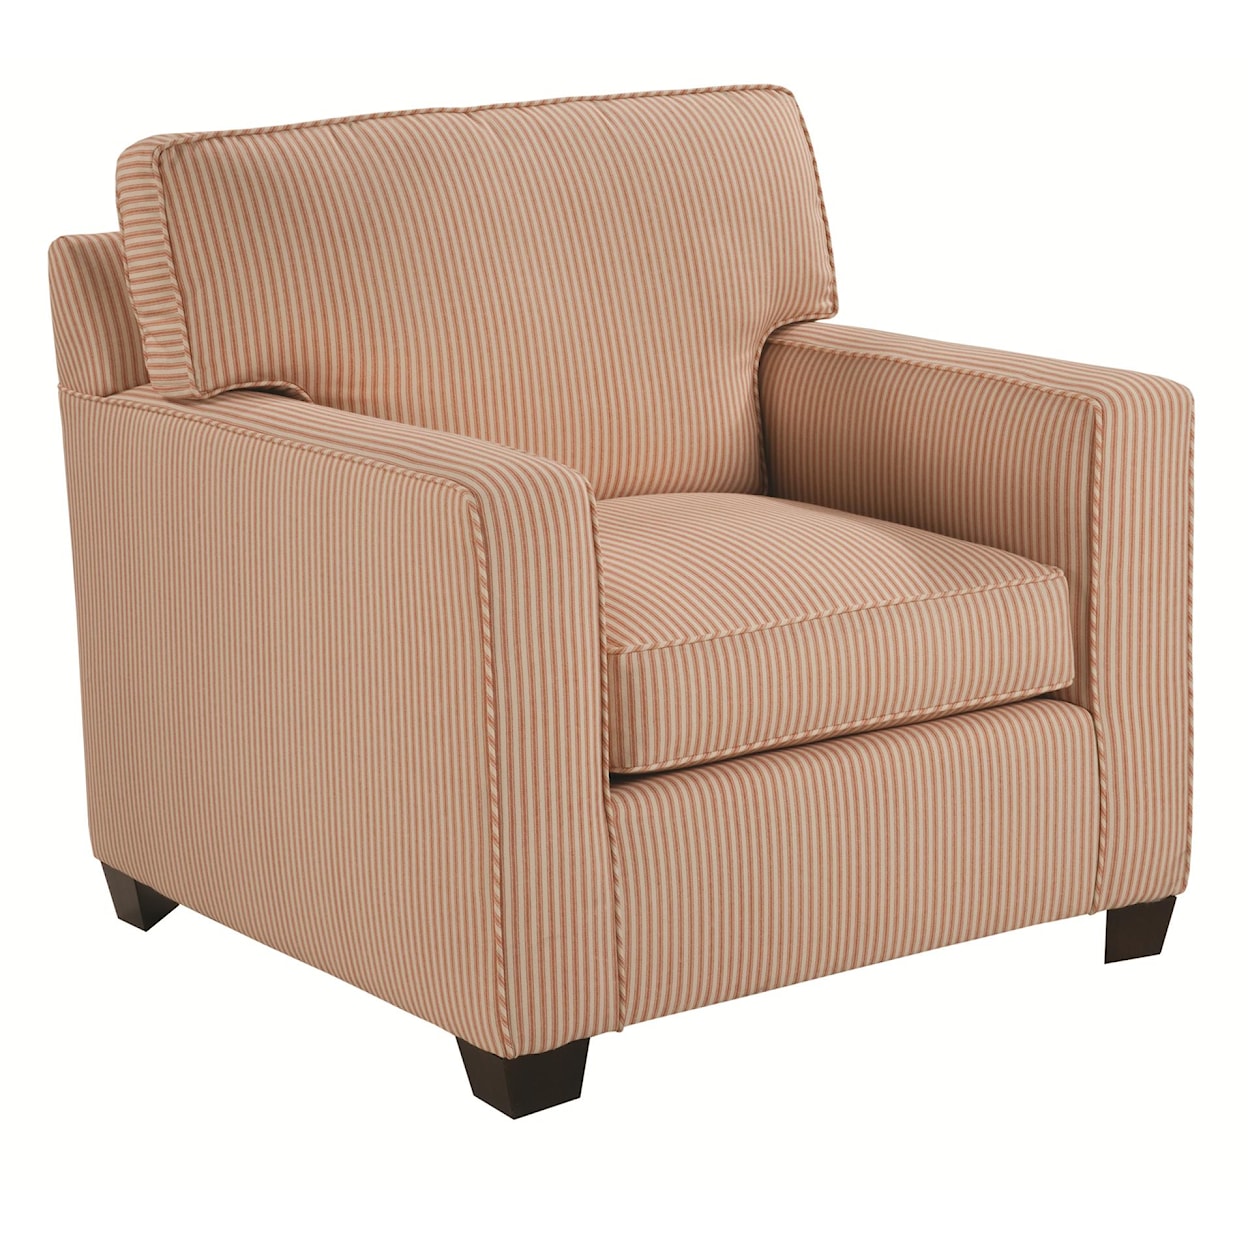 Kincaid Furniture Brooke Upholstered Chair